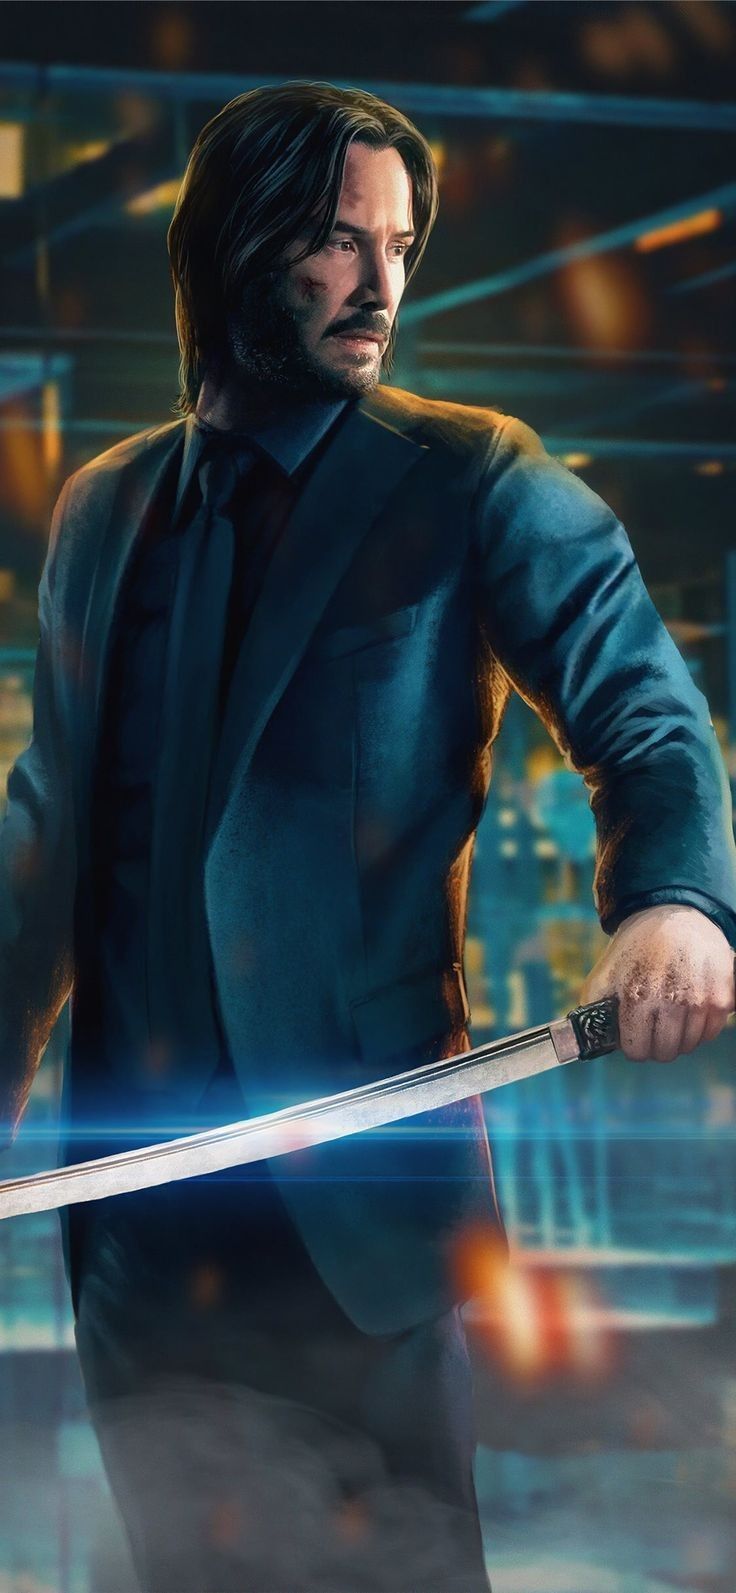 Keanu Reeves as John Wick holding a sword in the dark - John Wick